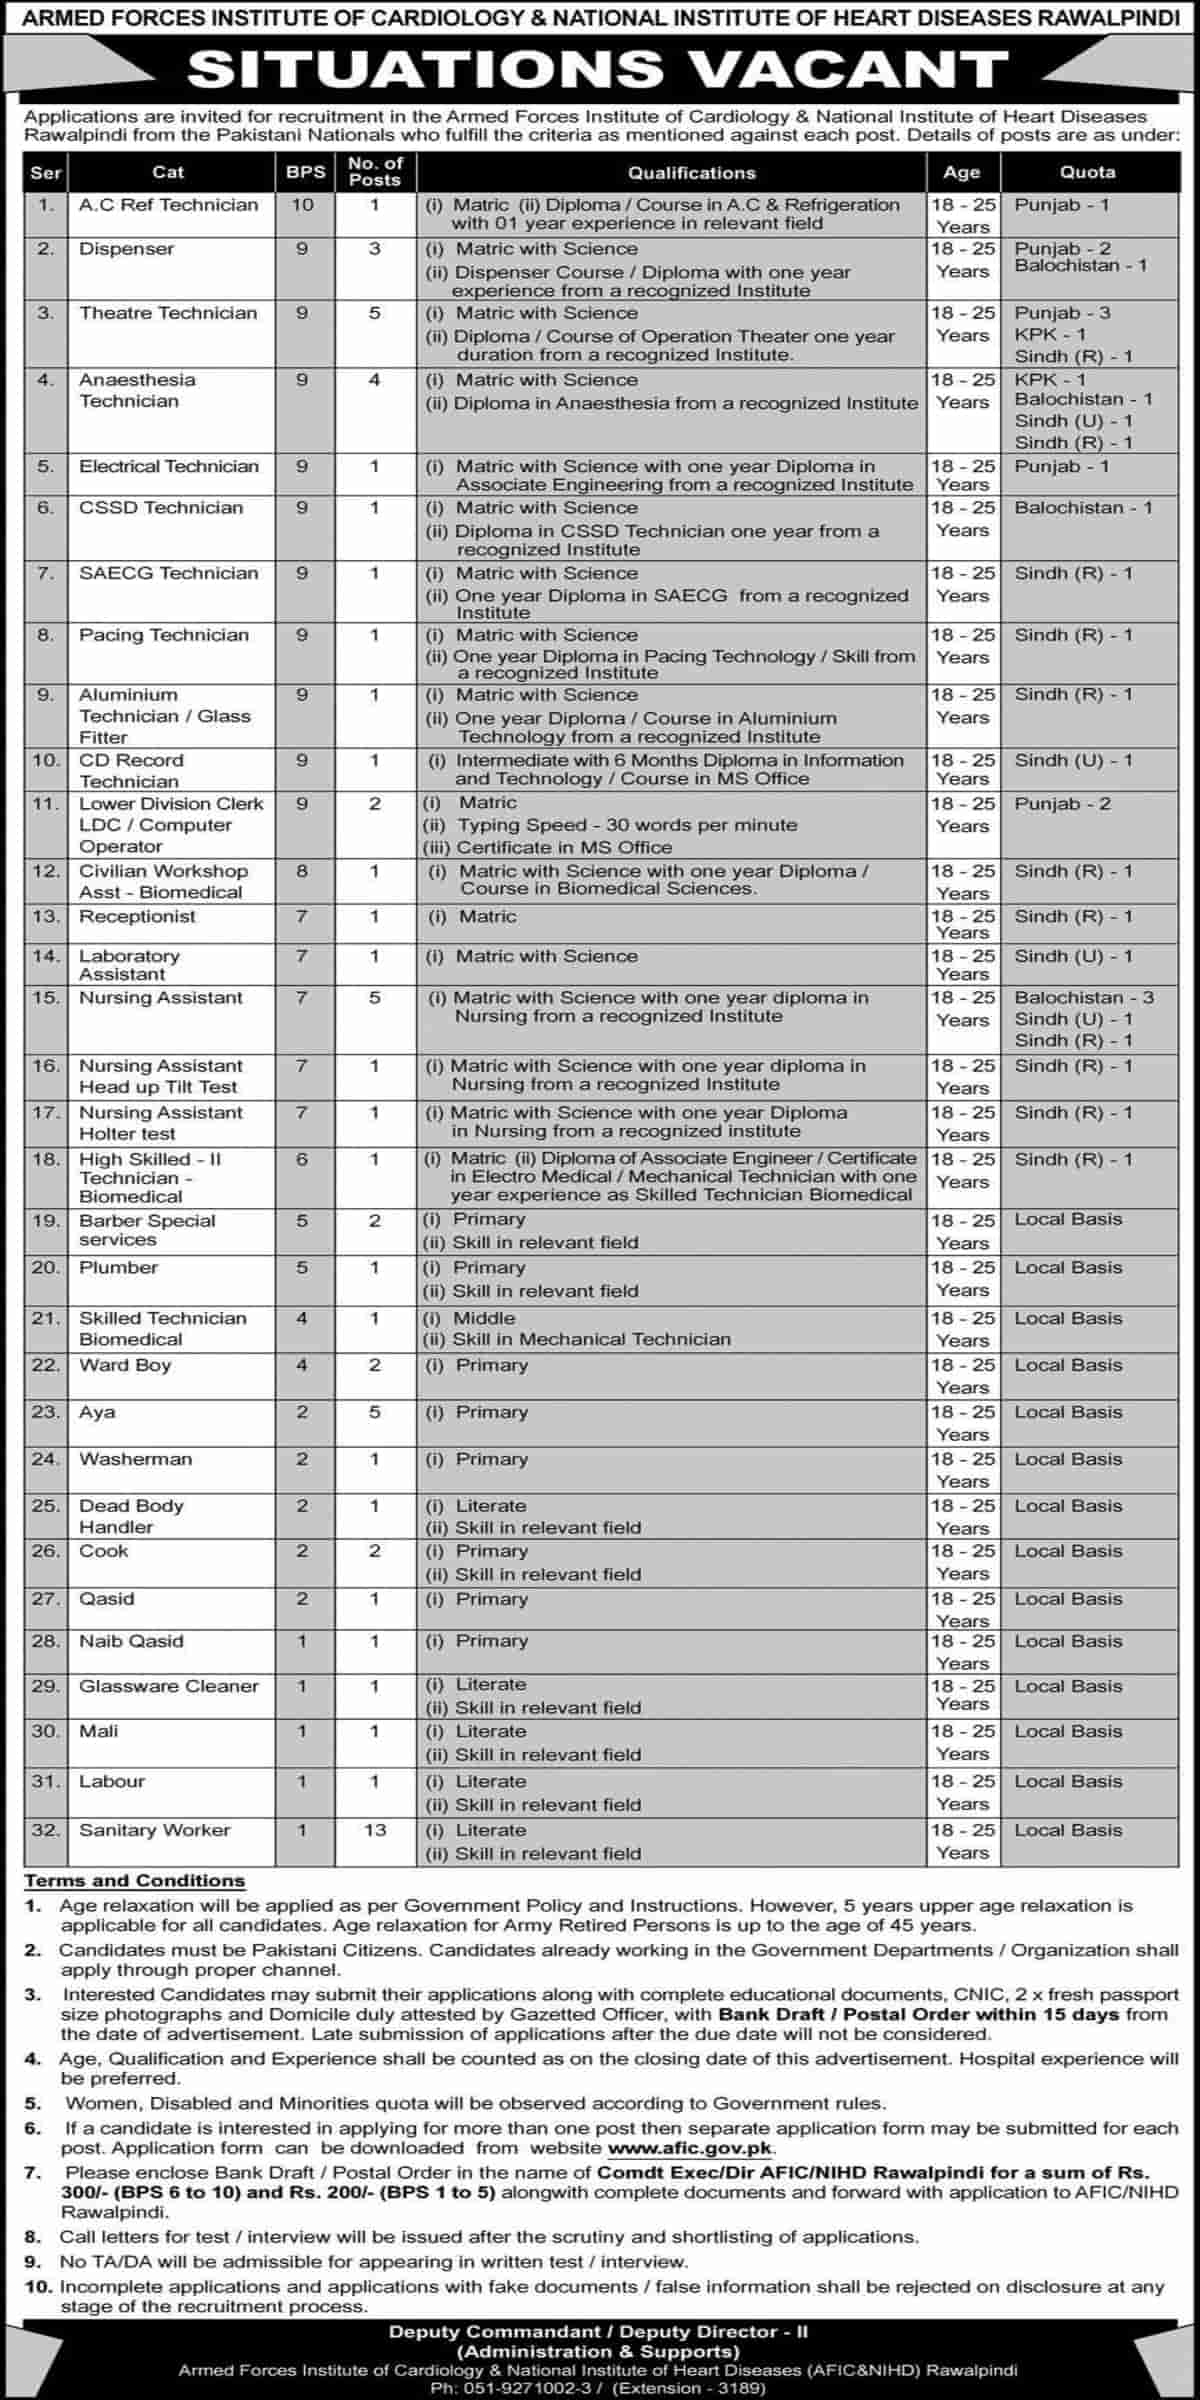 Pakistan Army AFIC & NIHD Rawalpindi Jobs 2021 Application Form www.afic.gov.pk Latest Advertisement